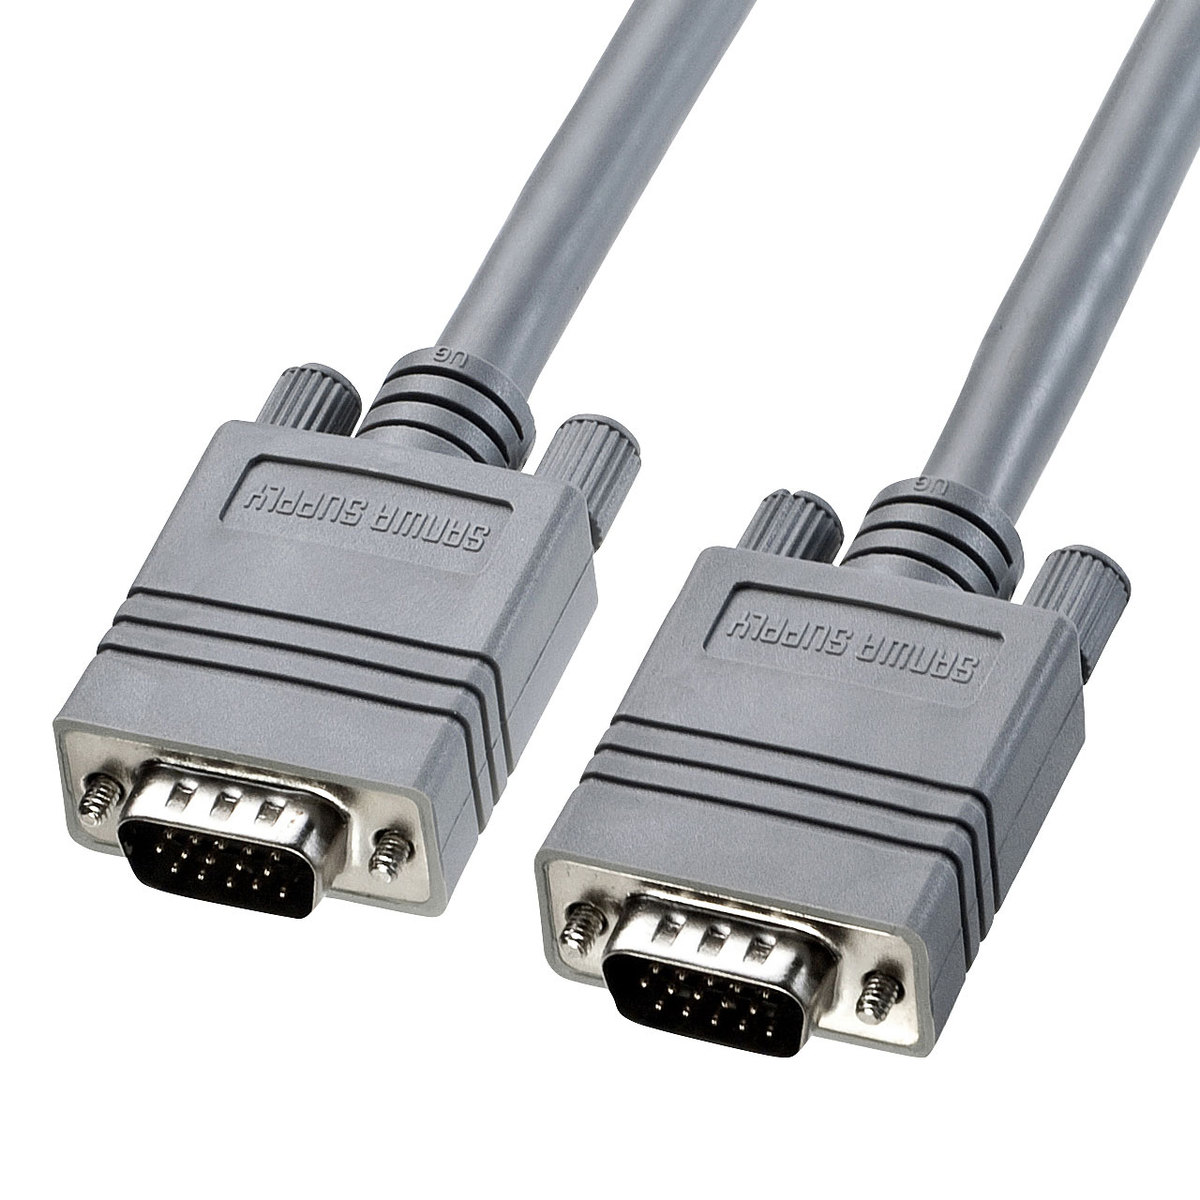 Display Cable (Compound Coaxial / Analog RGB), KB-CHD Series (KB-CHD1515K2) 